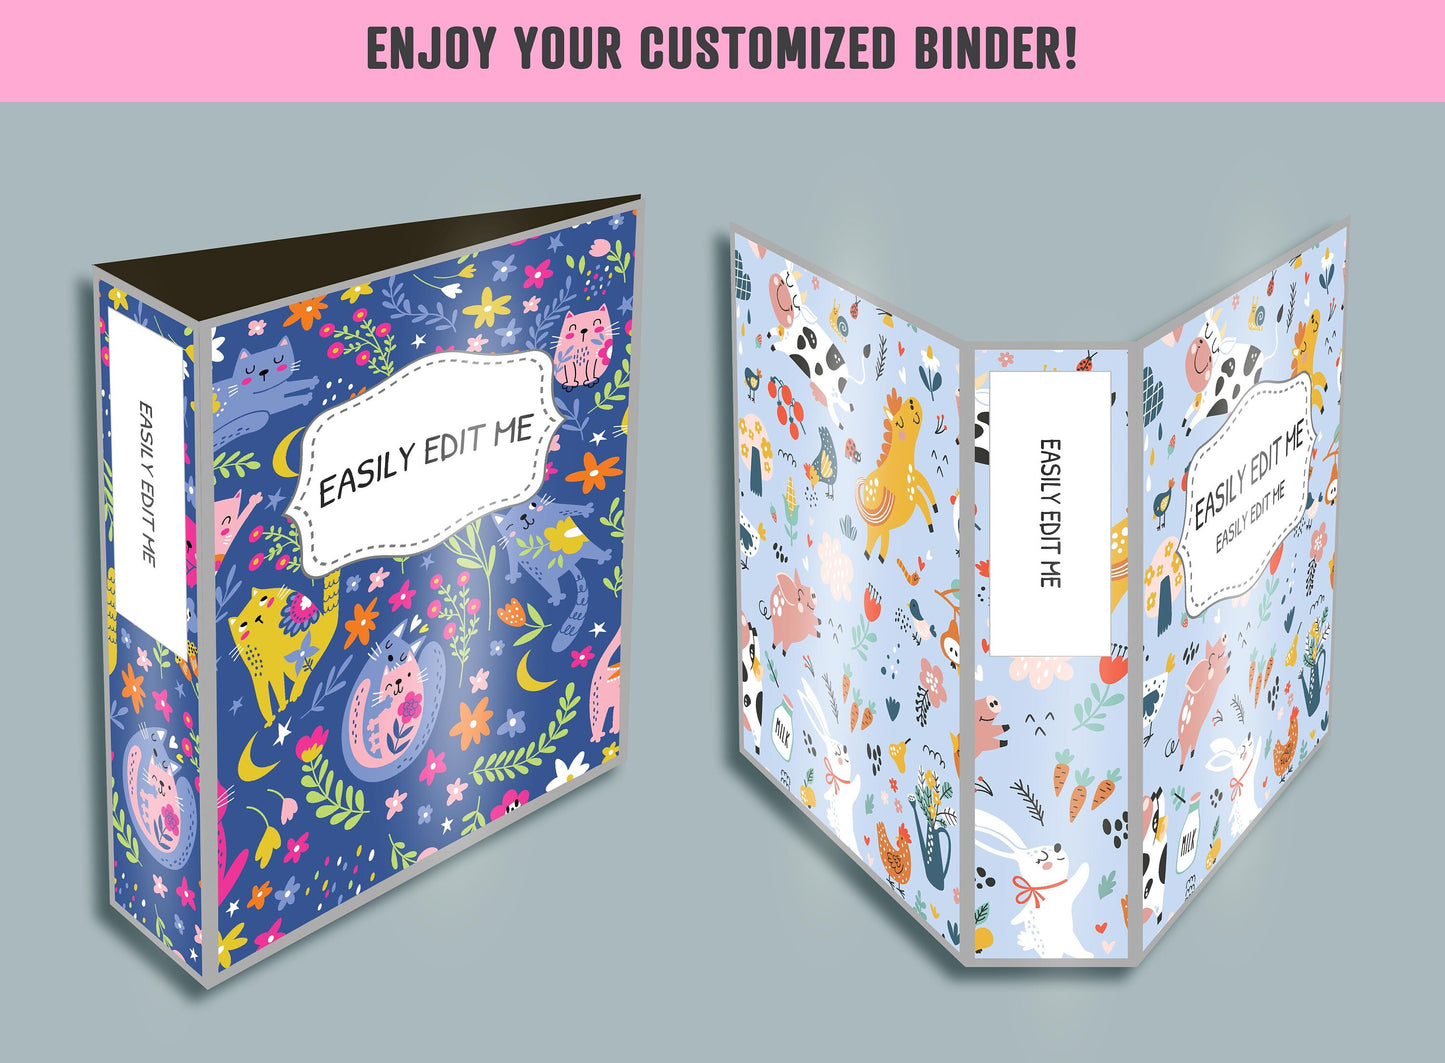 Cute Funny Animals Binder Cover, 10 Printable & Editable Binder Covers + Spines, Teacher/School Binder Labels, Planner/Folder Inserts